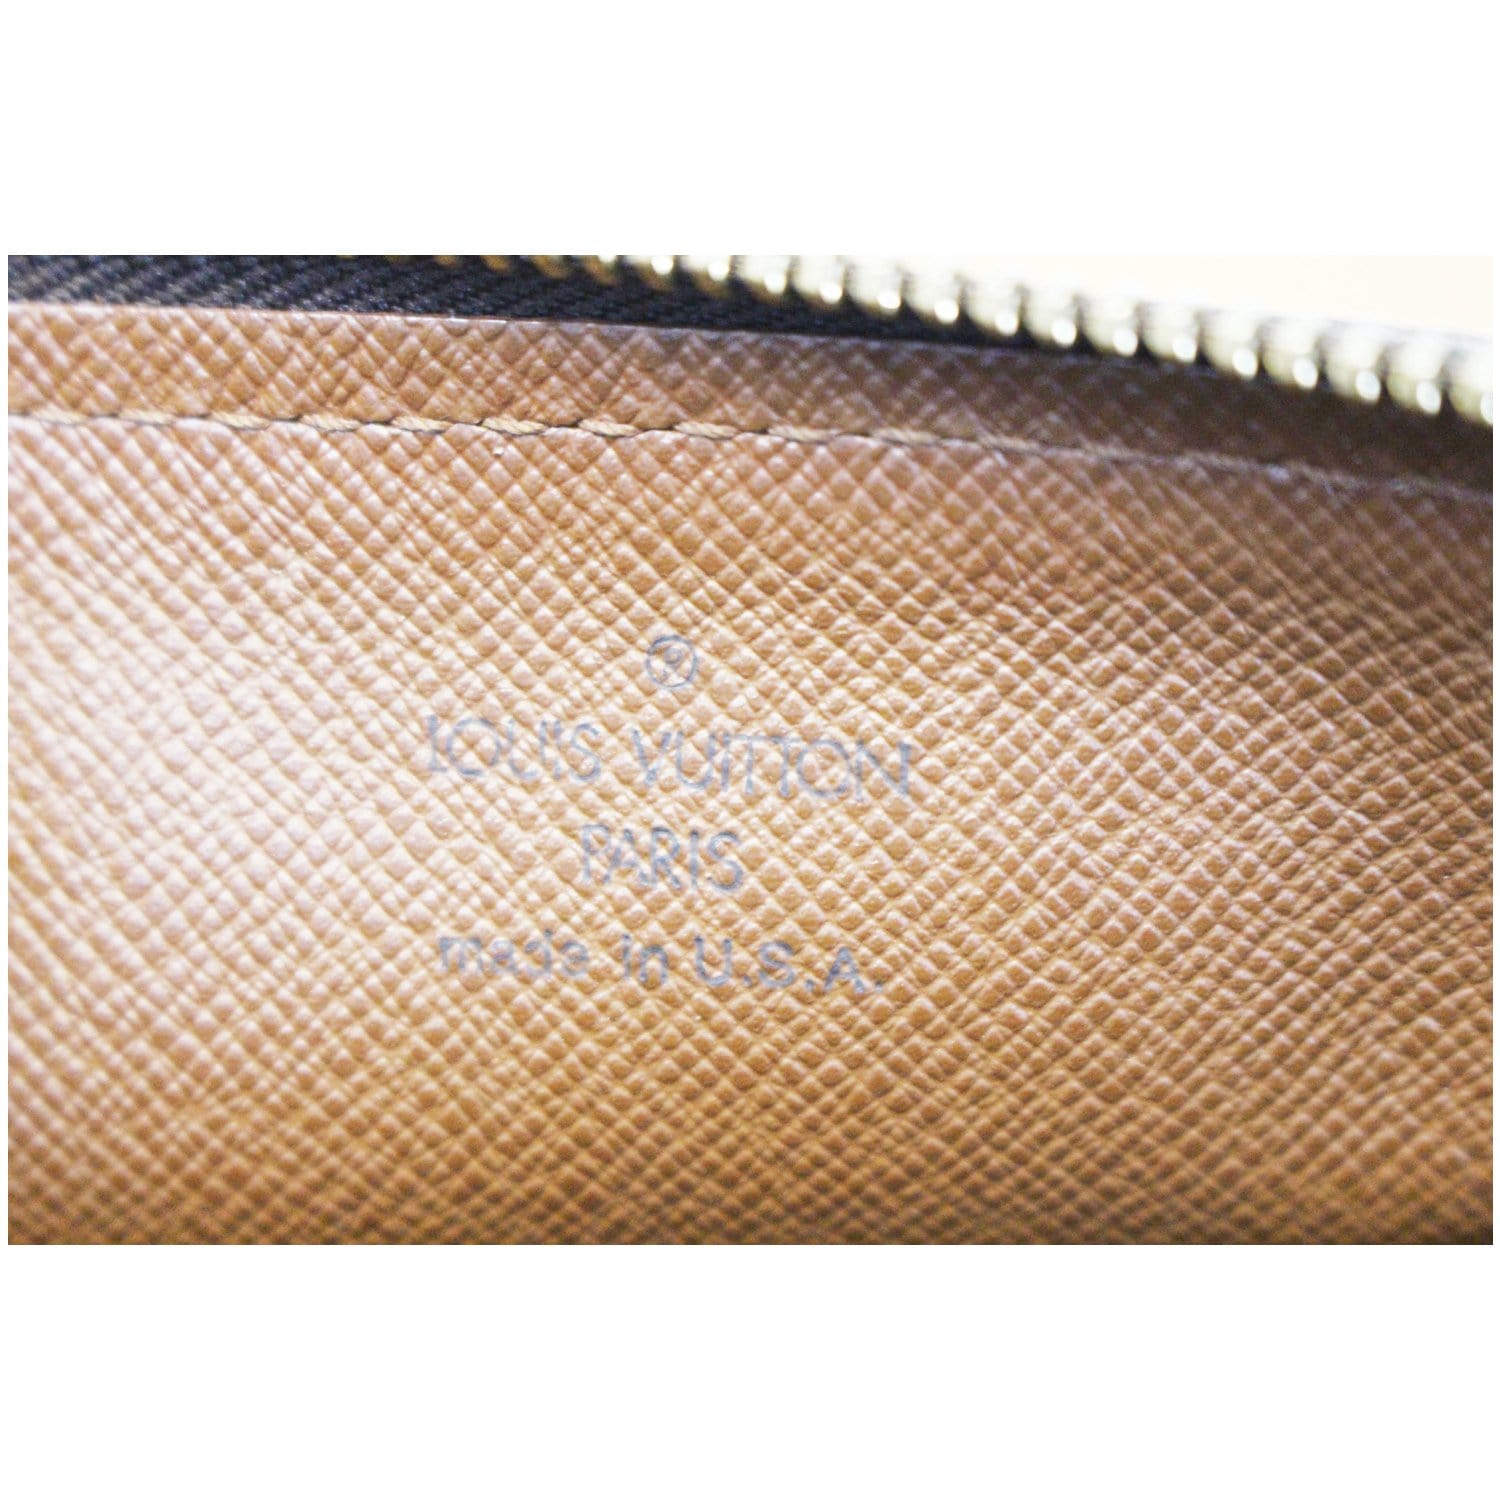 Auth LOUIS VUITTON Papillon 26 M51366 Monogram TH1901 Handbag